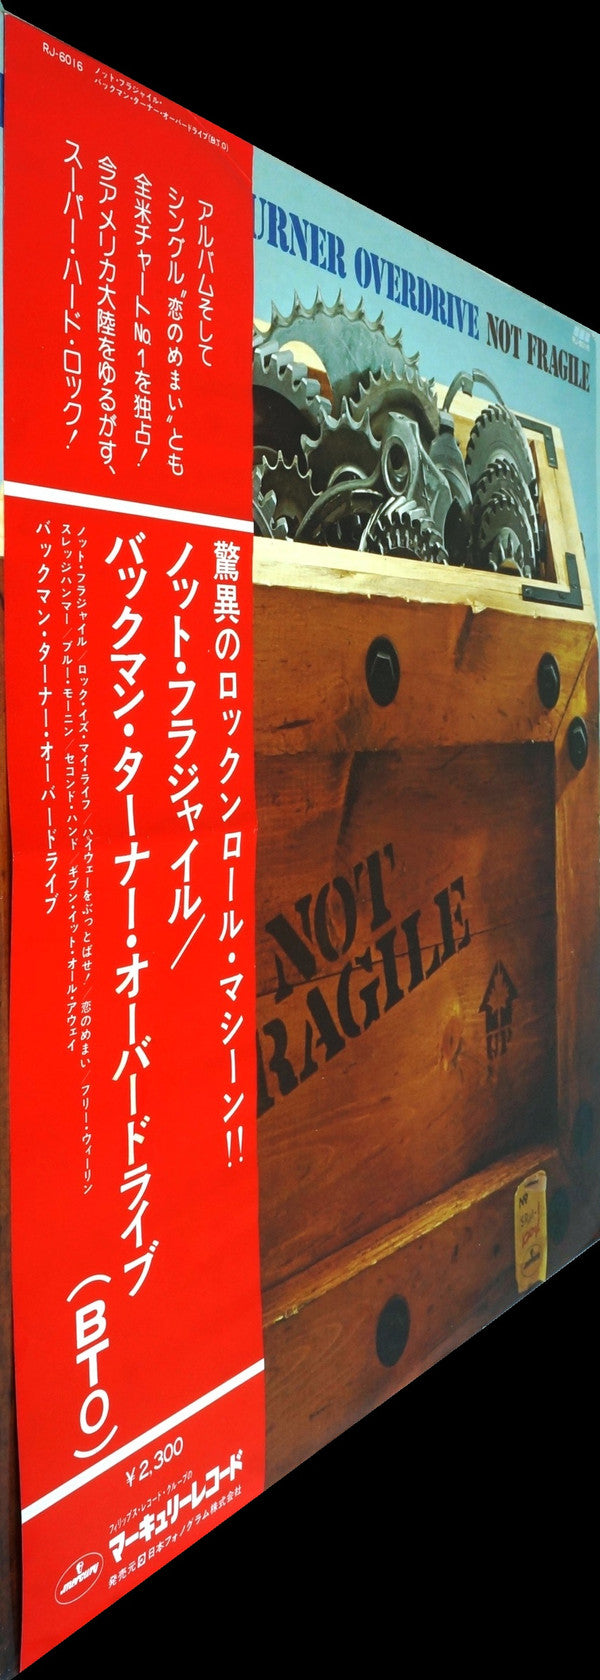 Bachman-Turner Overdrive - Not Fragile (LP, Album)